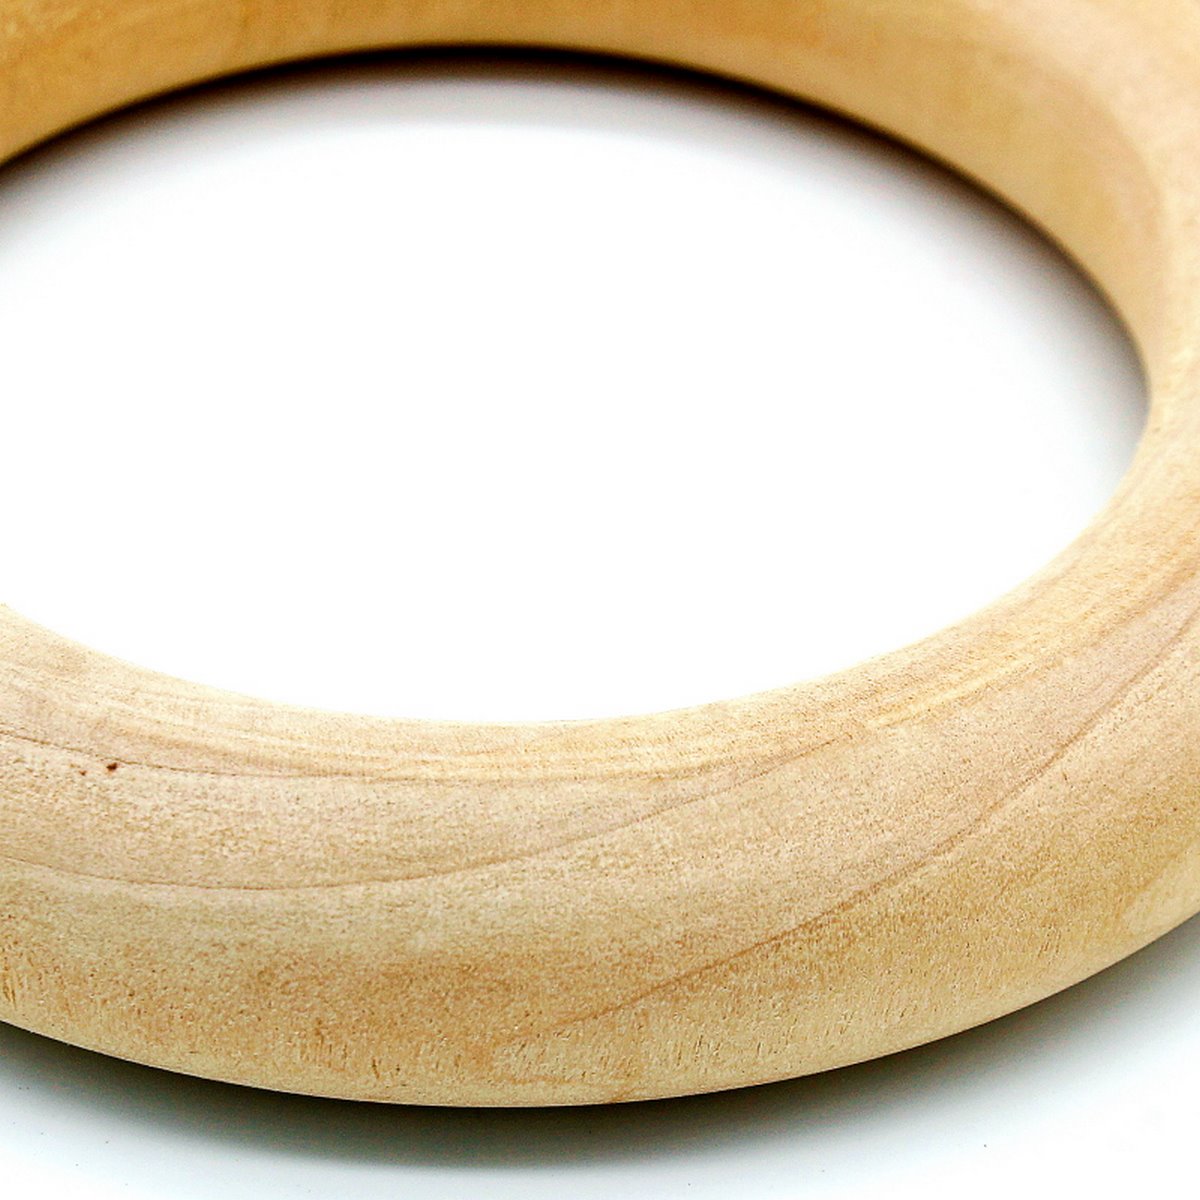 jags-mumbai Wooden Slice Round Wooden Ring 9cm